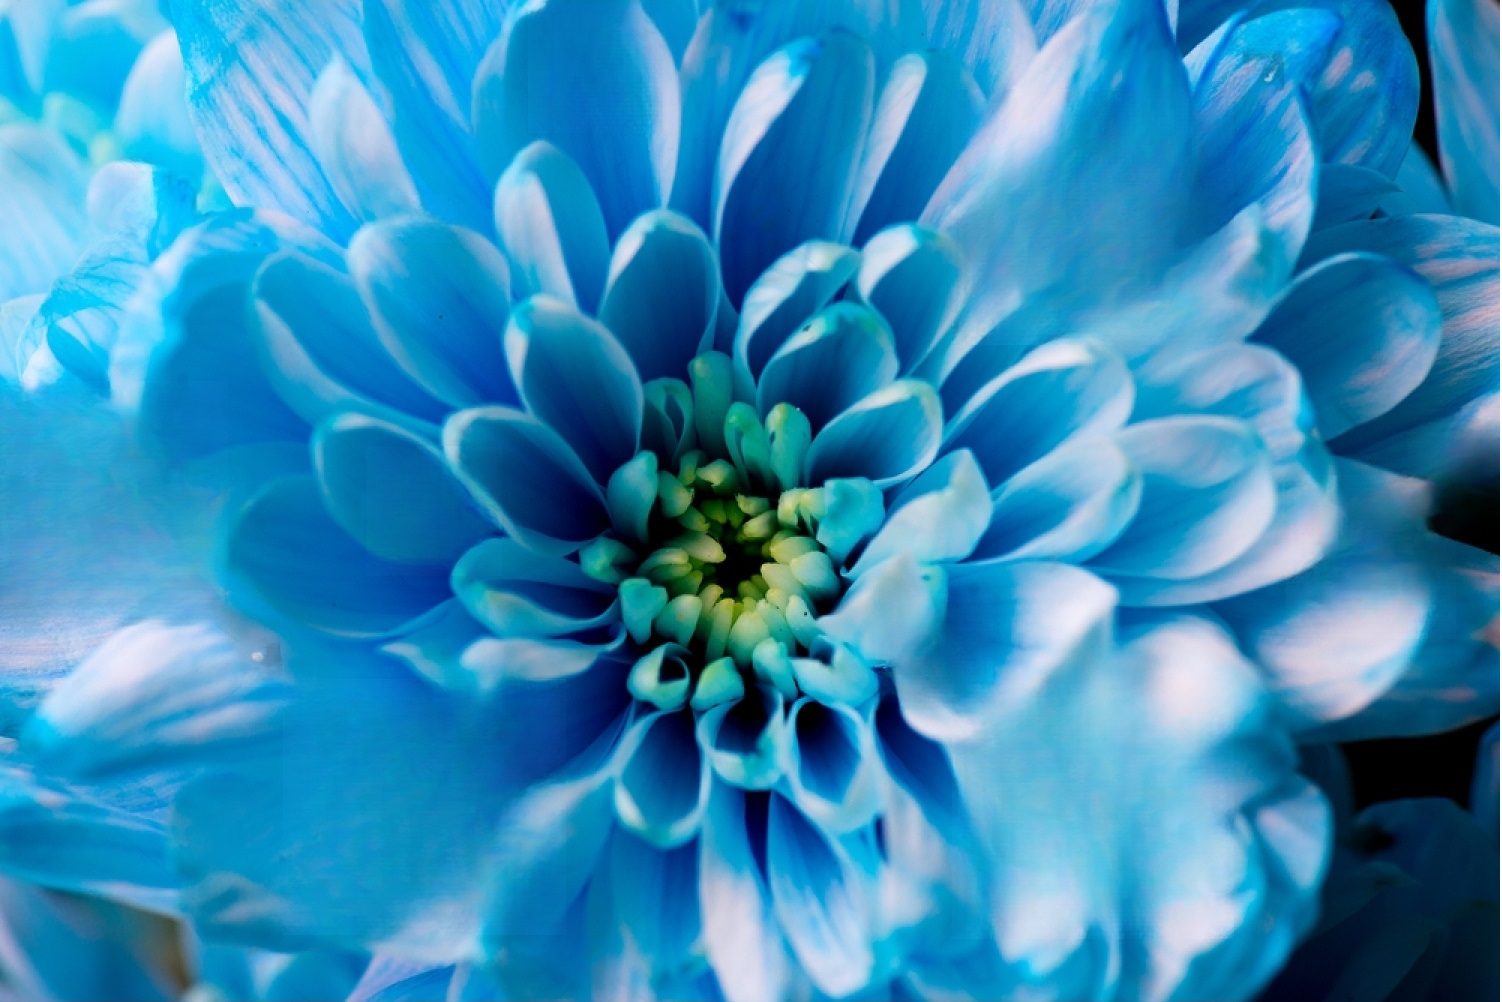 stock-photo-blue-chrysanthemum-flowers-close-up-371878135-transformed